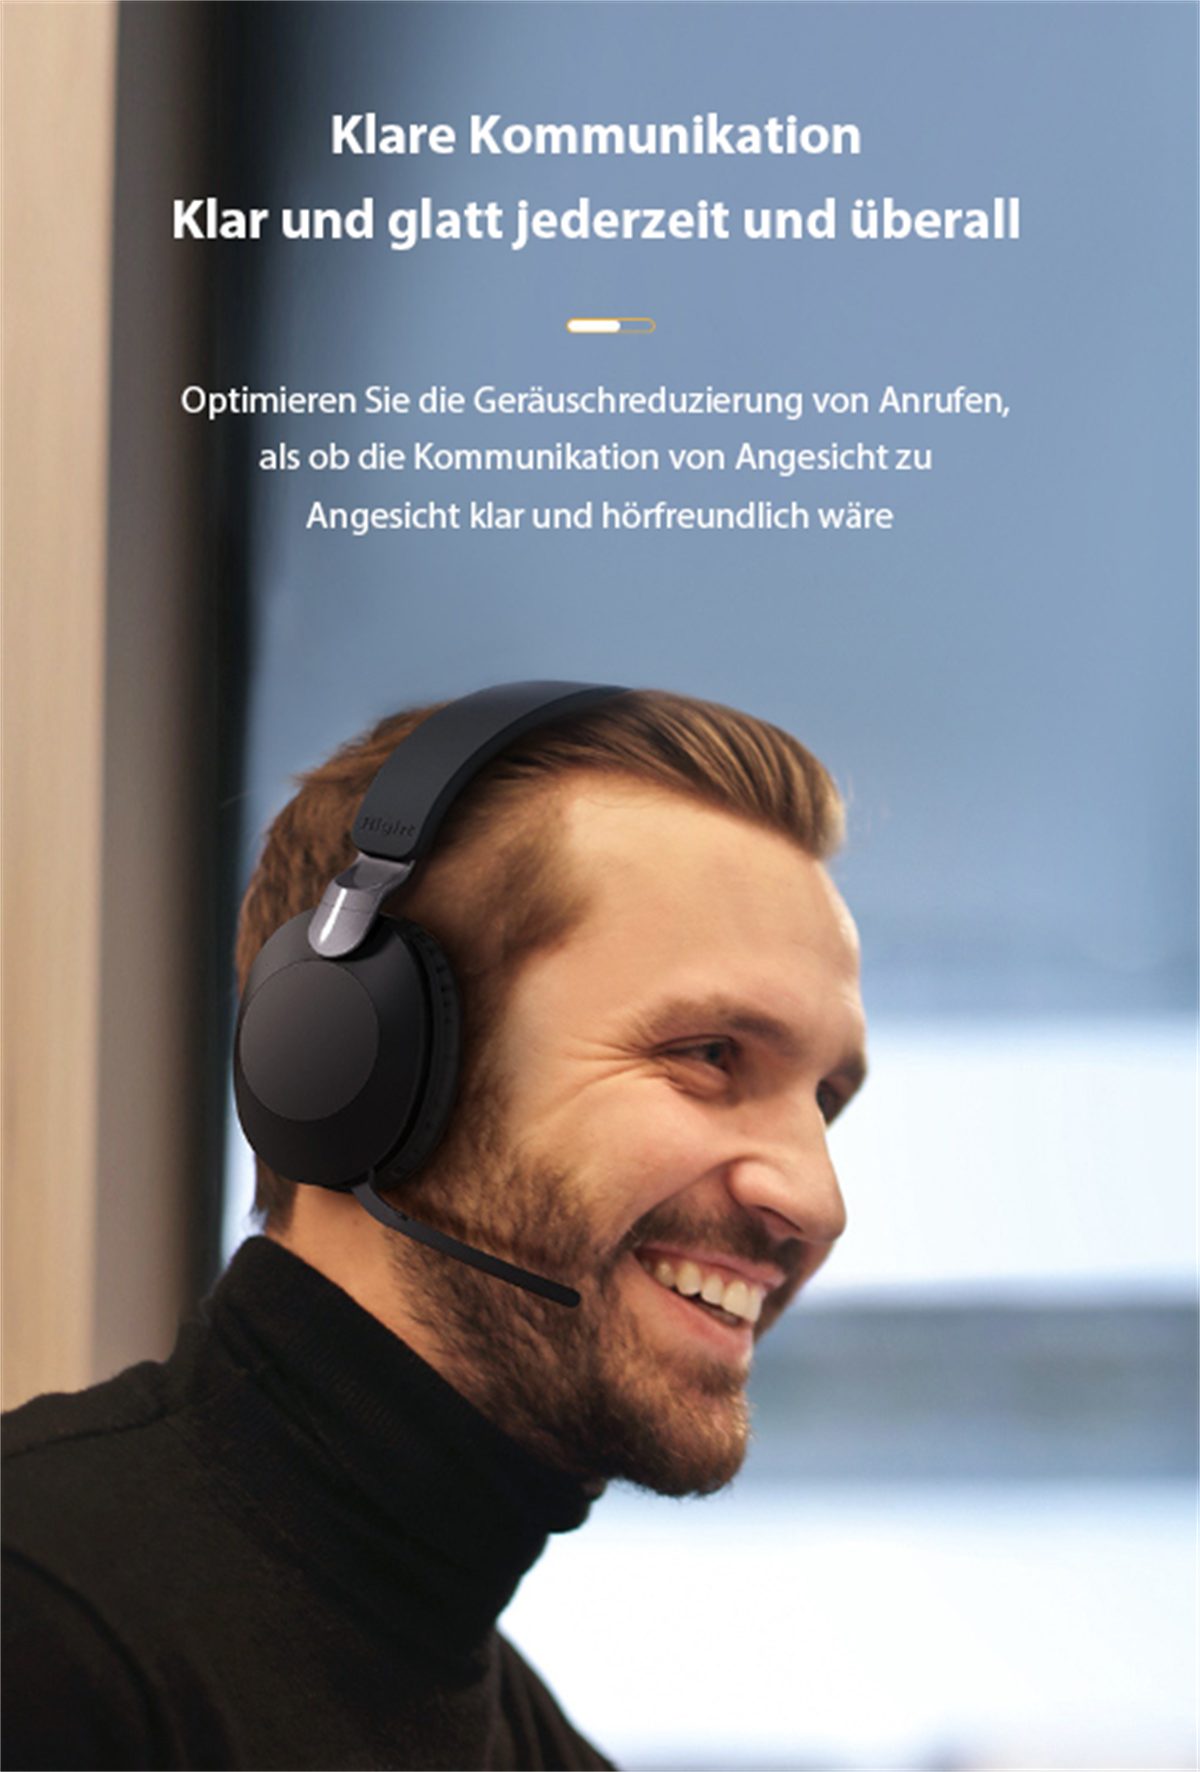 carefully selected Am Kopf Akkulaufzeit Bluetooth-Gaming-Headset befestigtes langer Over-Ear-Kopfhörer Korallrot mit